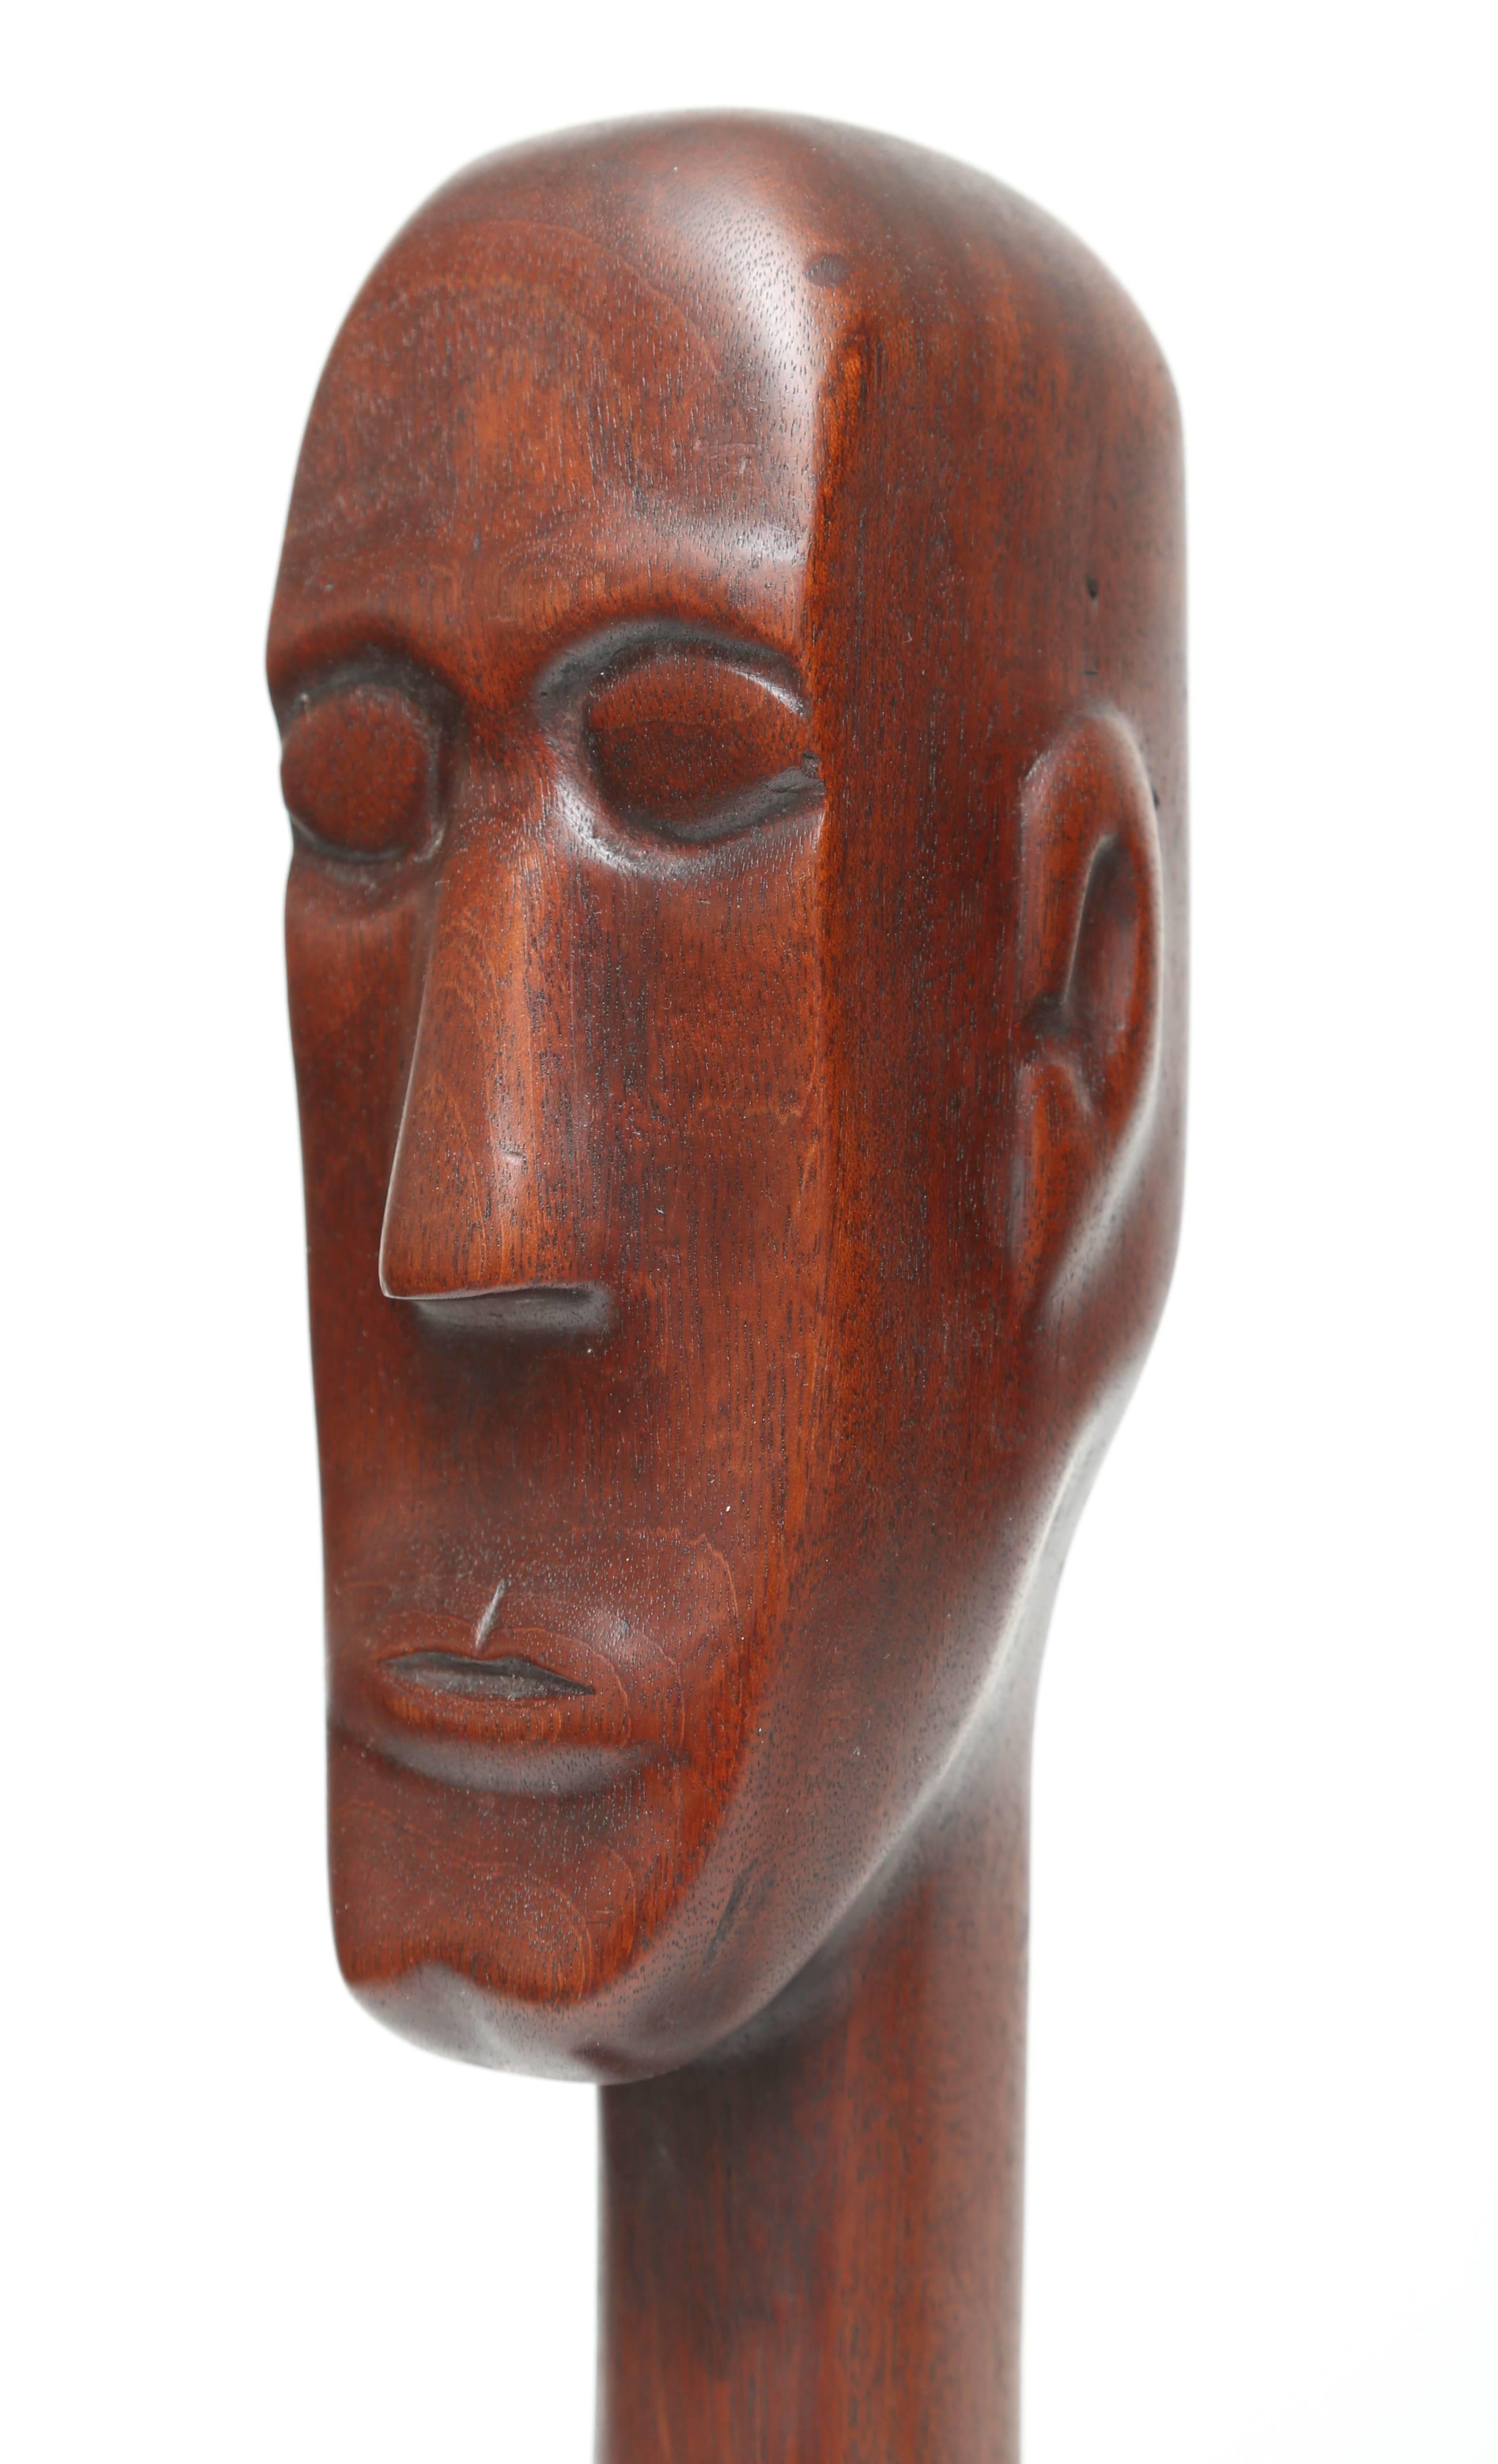 American Mid-Century Modern Sculptural Primitive Folk Art Carved Wood Figures Zinzow 1969 For Sale